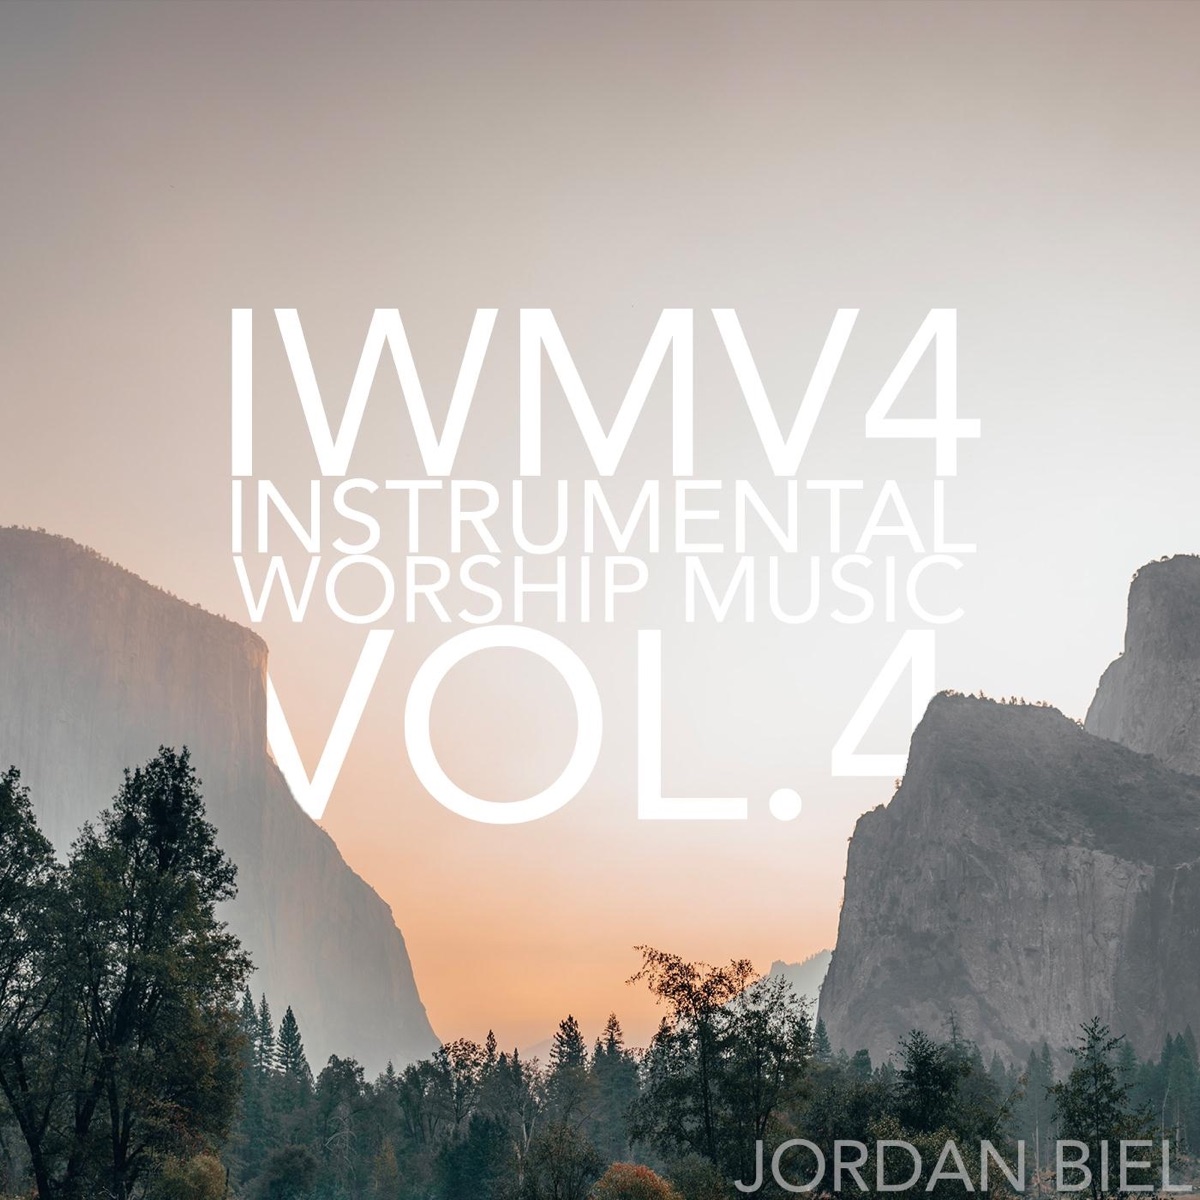 Instrumental Worship Music, Vol. 4 by Jordan Biel on Apple Music